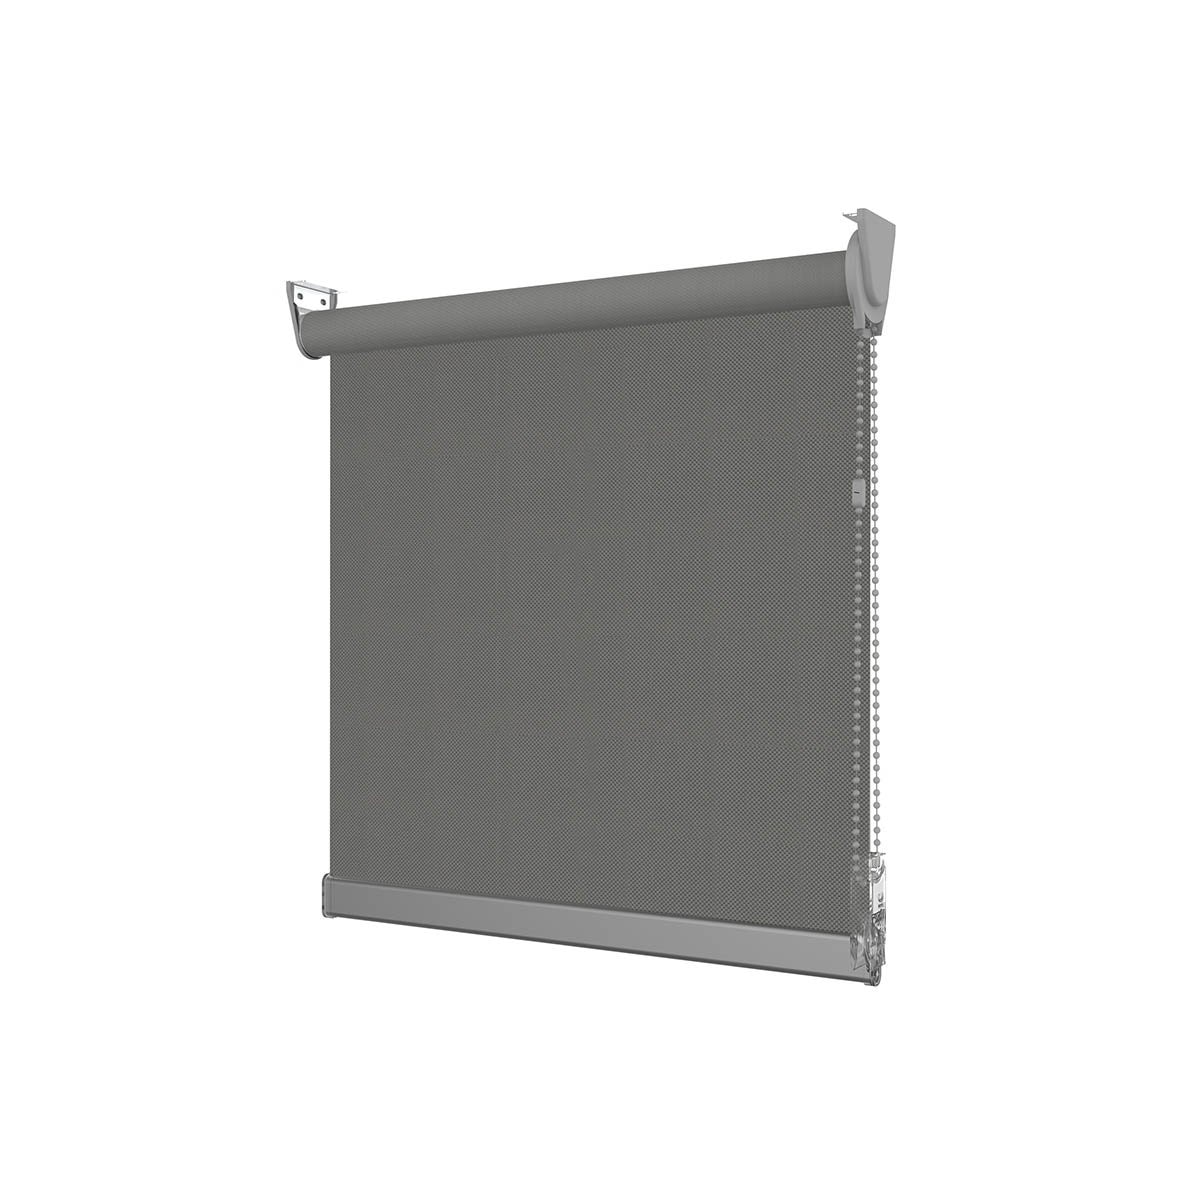 Persiana Enrollable Translucida Screen Phifer 4500 New 1.20 X 1.90 Granite Classic